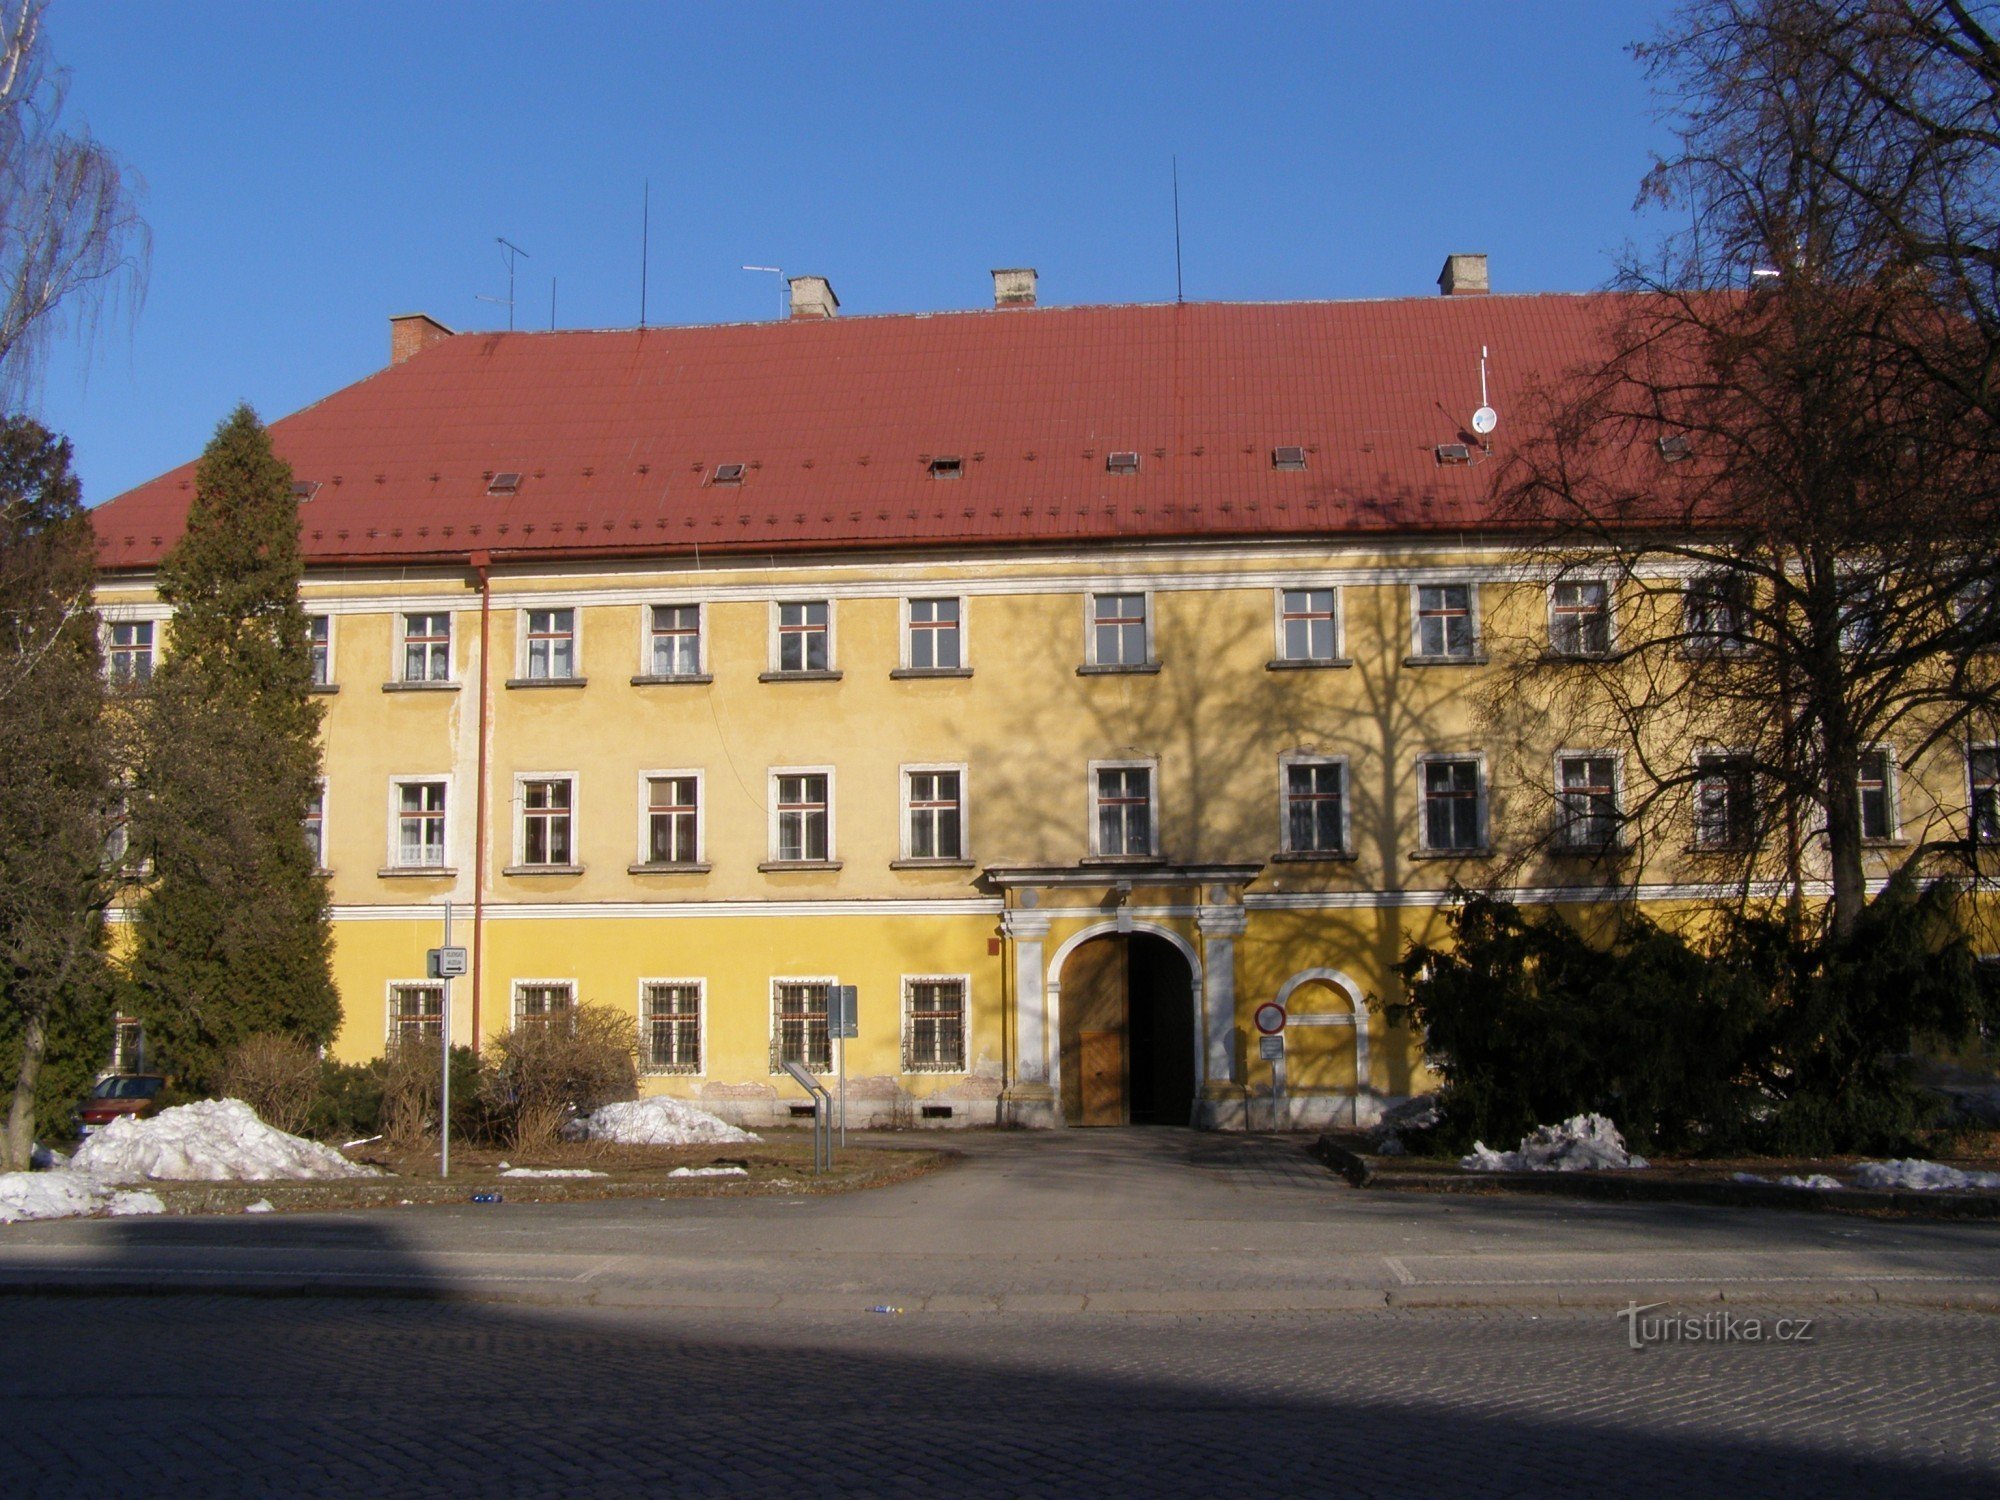 Josefov - Το πρώτο στρατιωτικό ιστορικό μουσείο του M. Frost